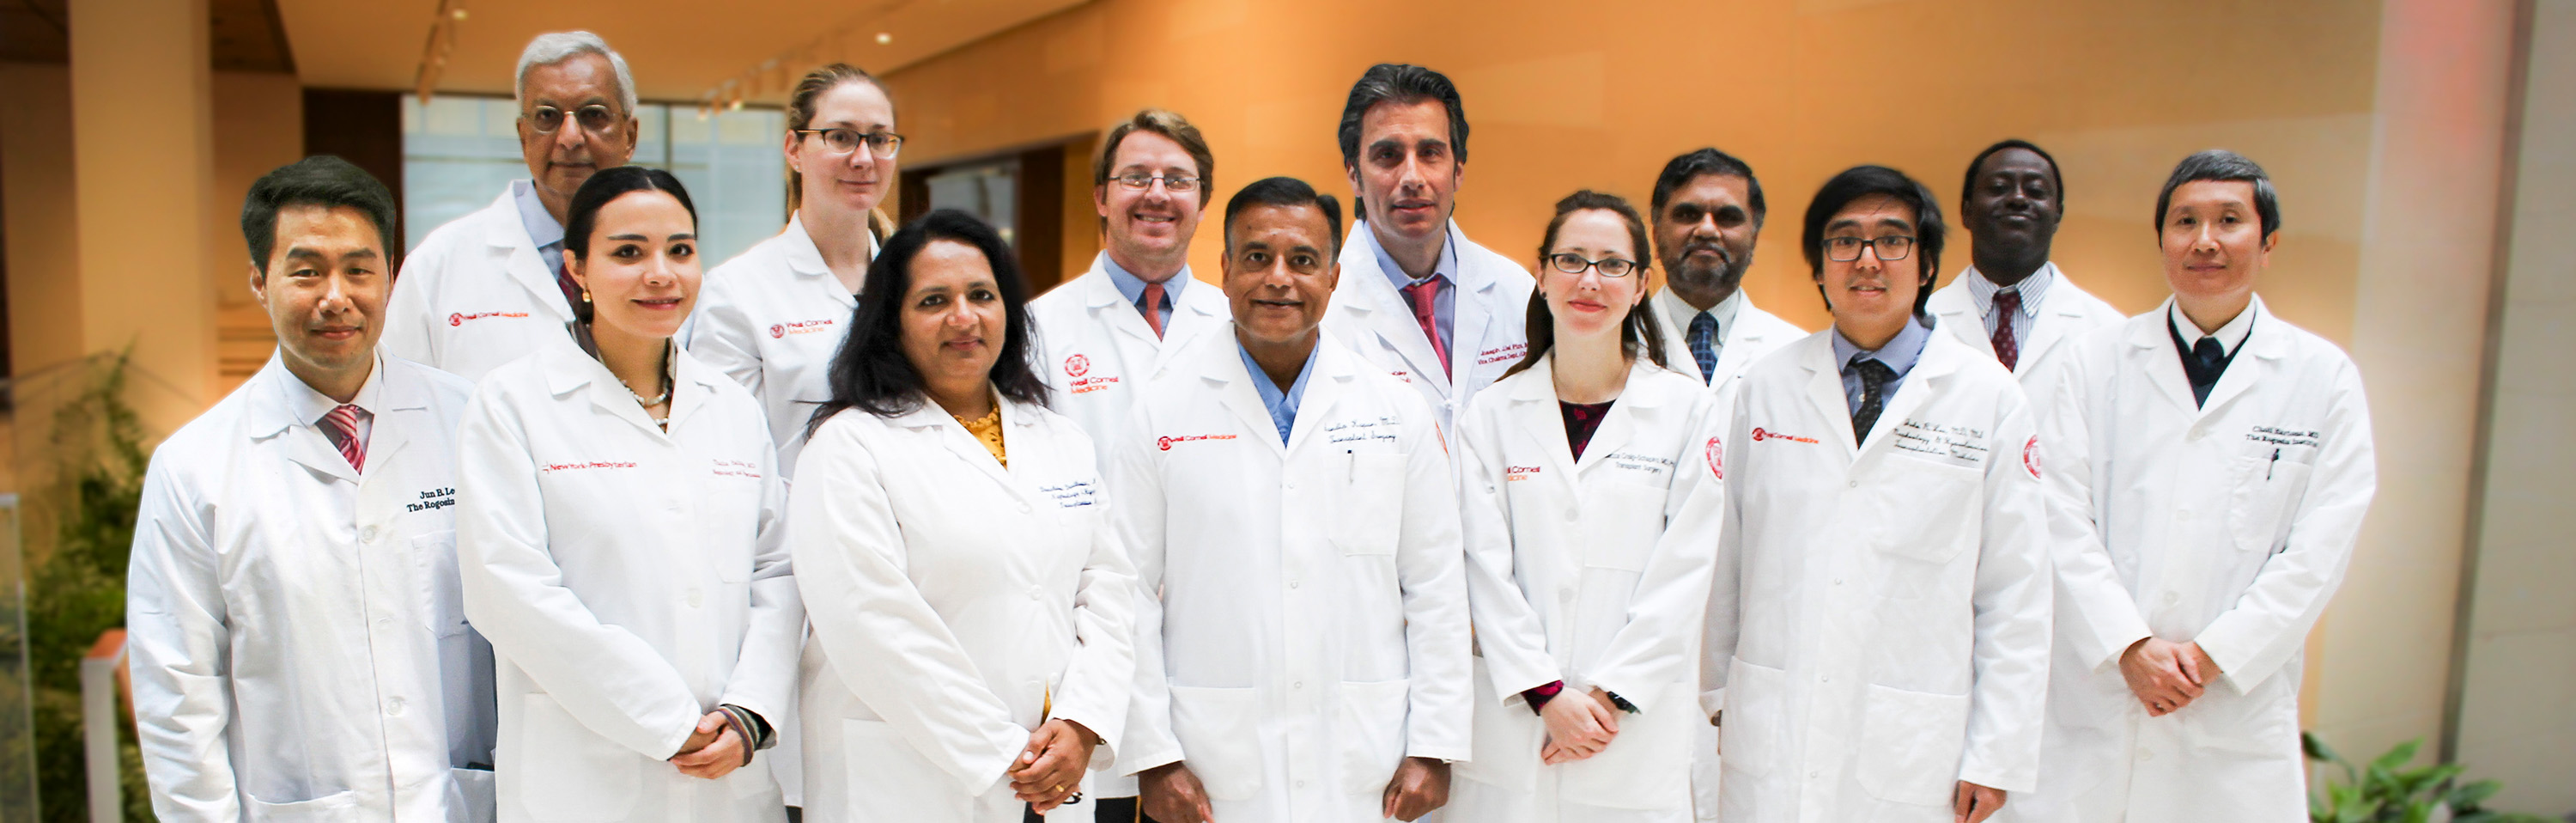 The adult kidney transplantation team at Weill Cornell Medicine